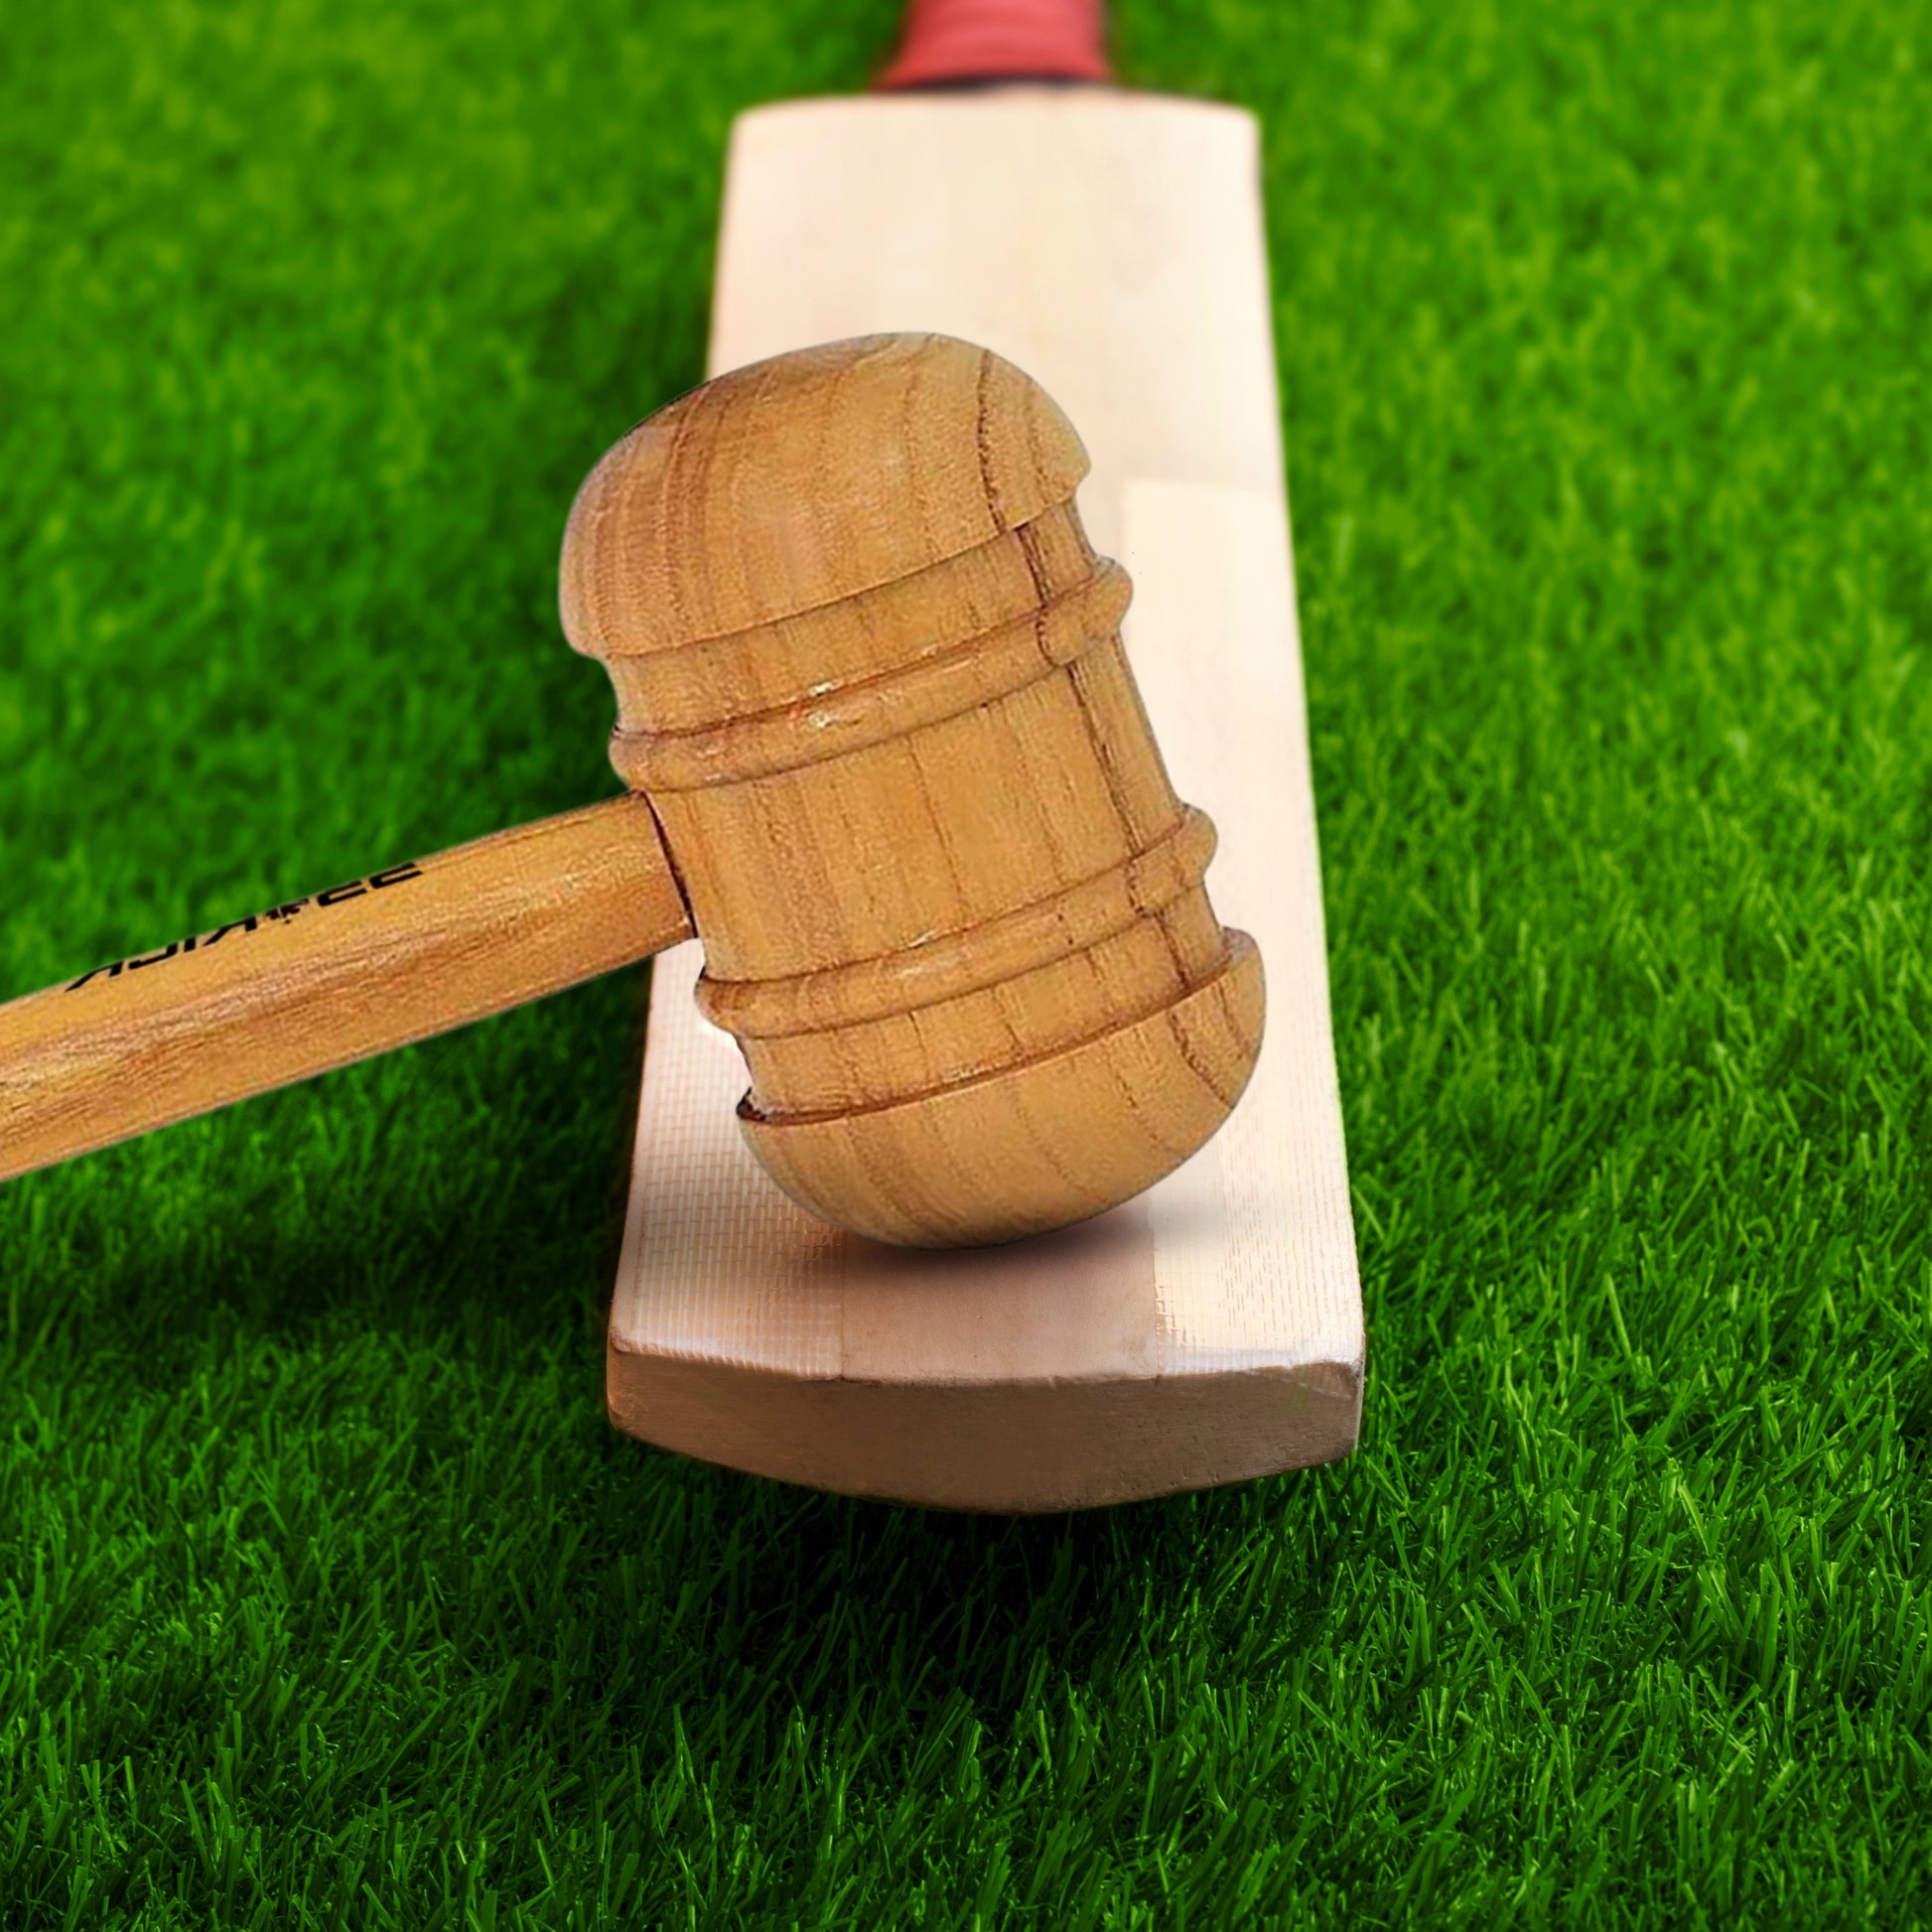 Prokick Cricket Bat Knocking Wooden Mallet - Best Price online Prokicksports.com